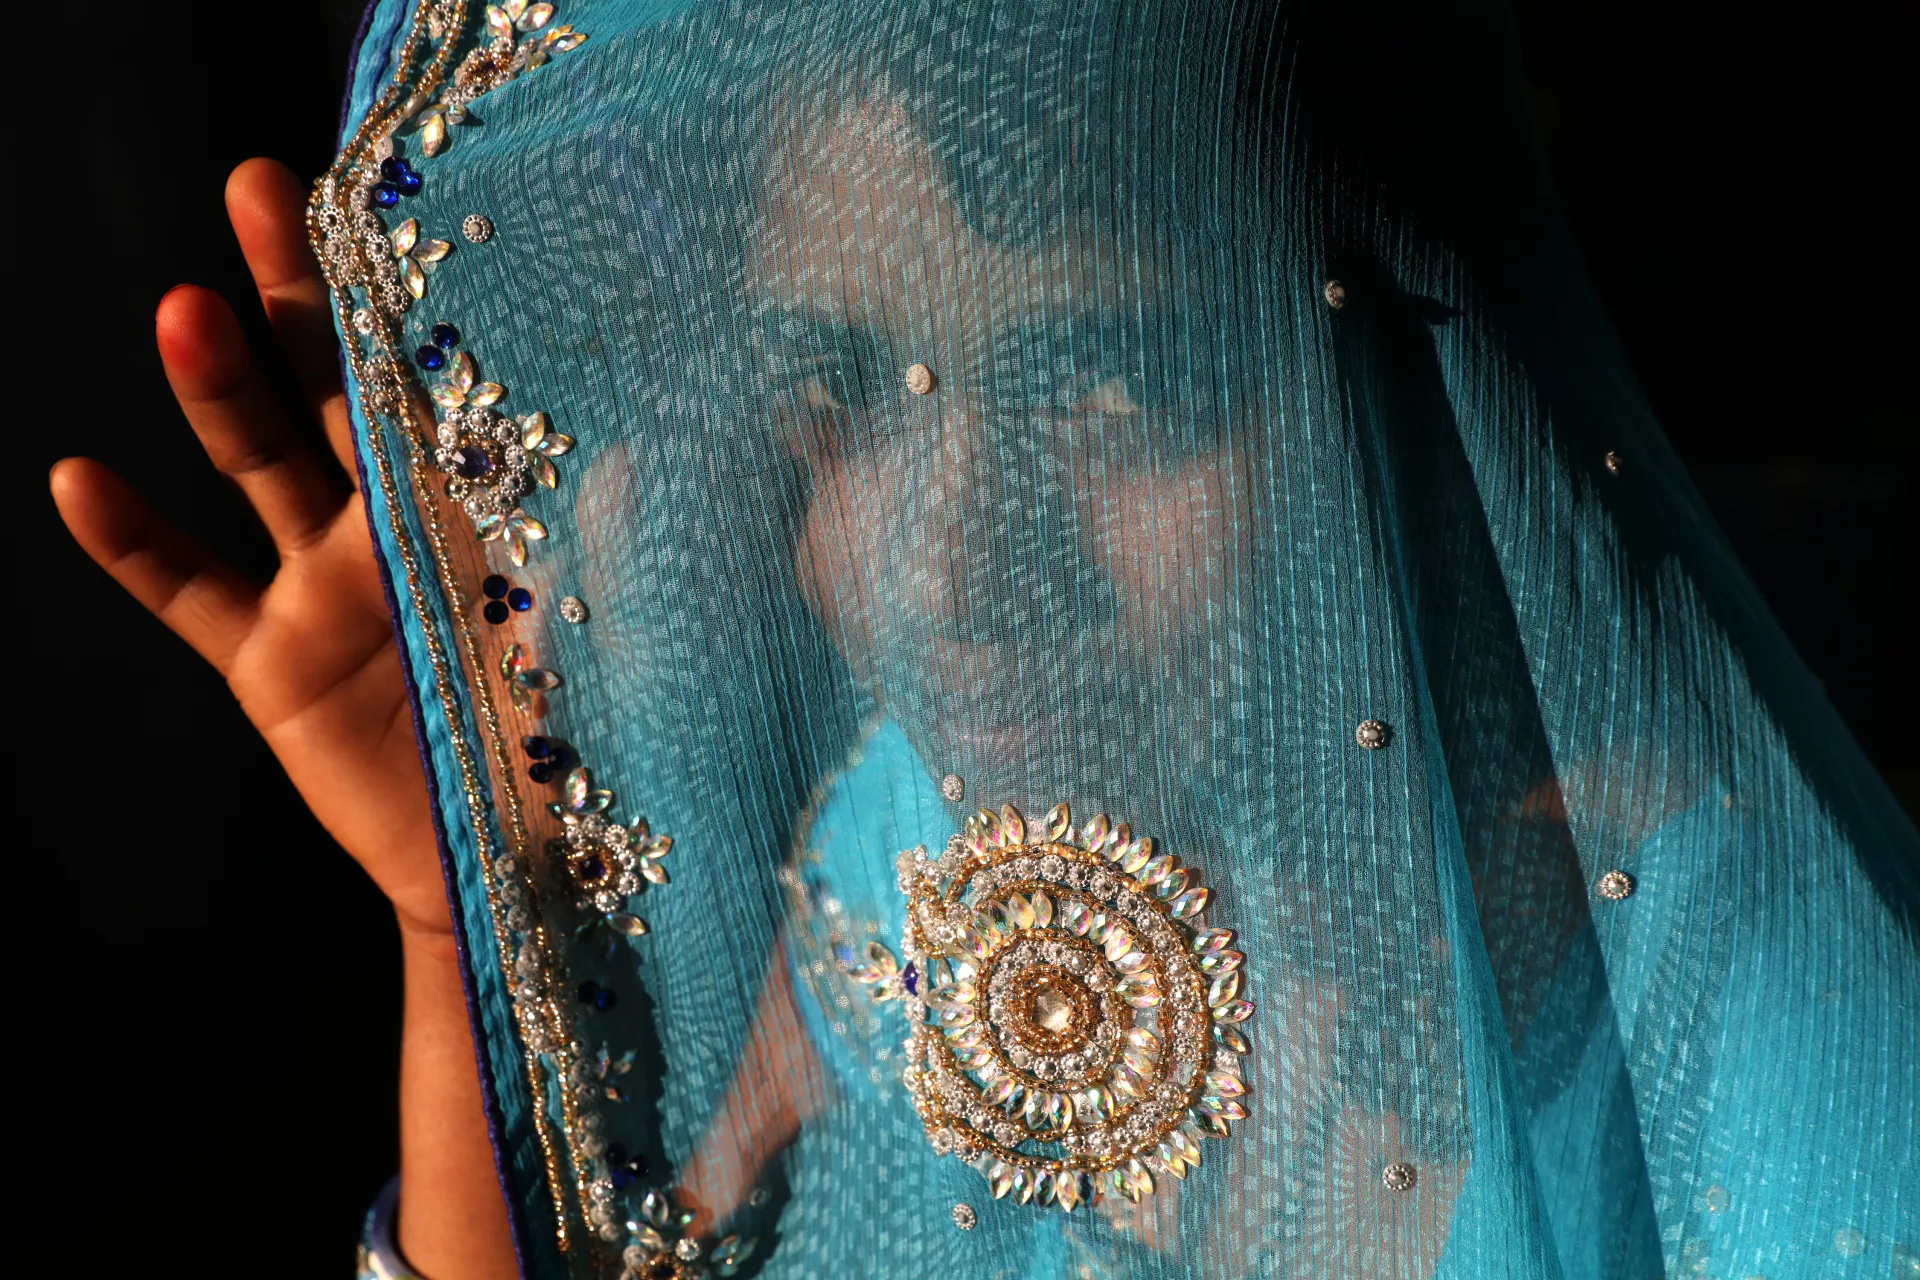 Teen bride. Village Santpur, India